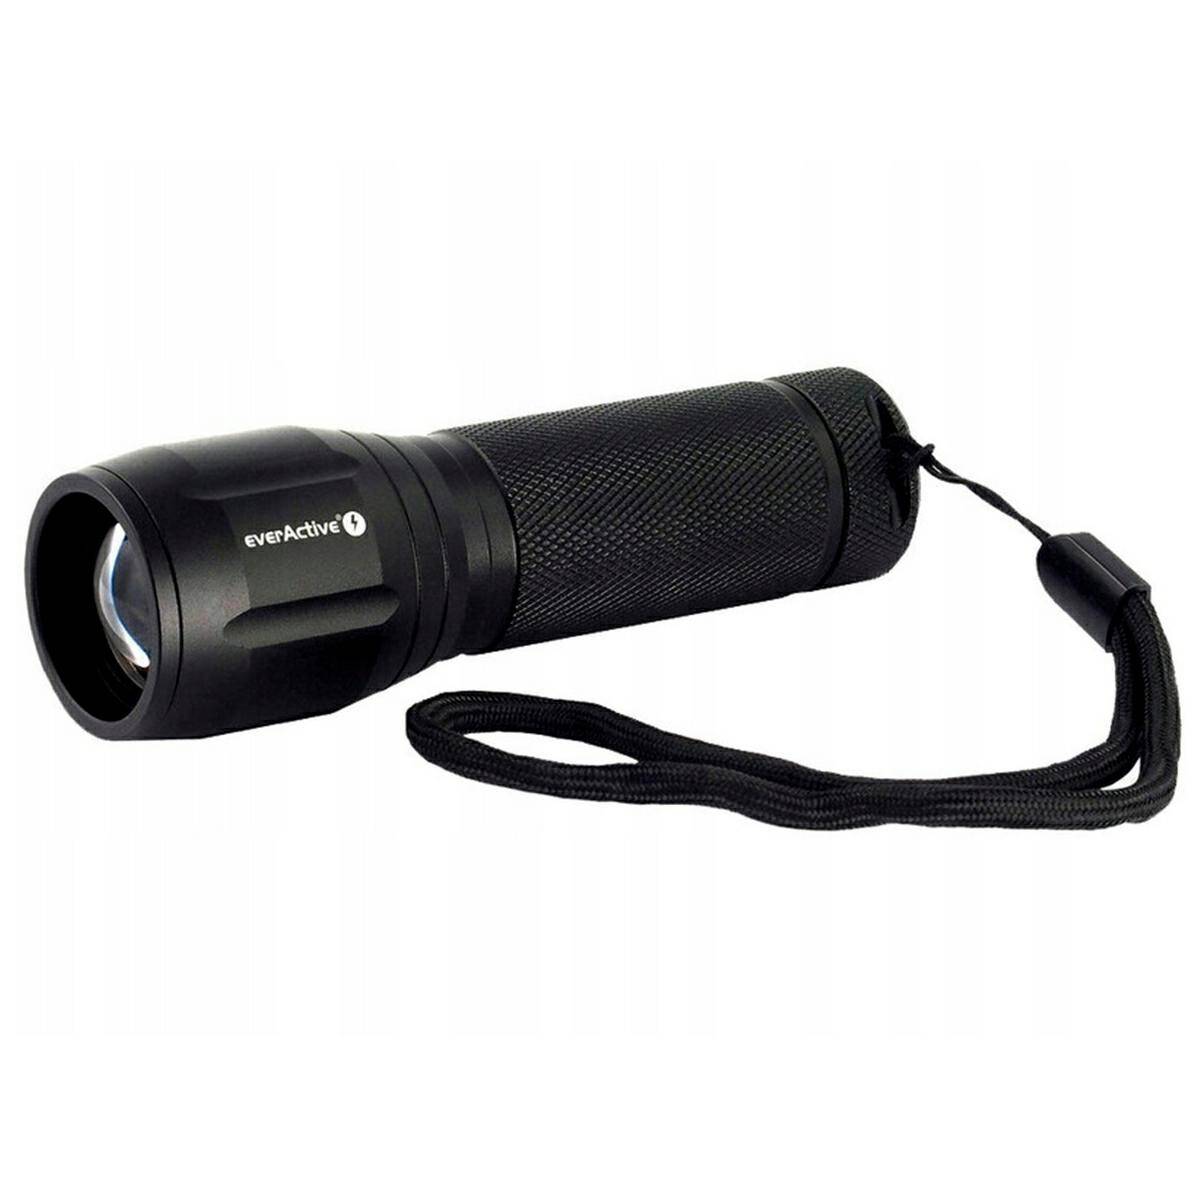 EverActive LED flashlight 350 lm